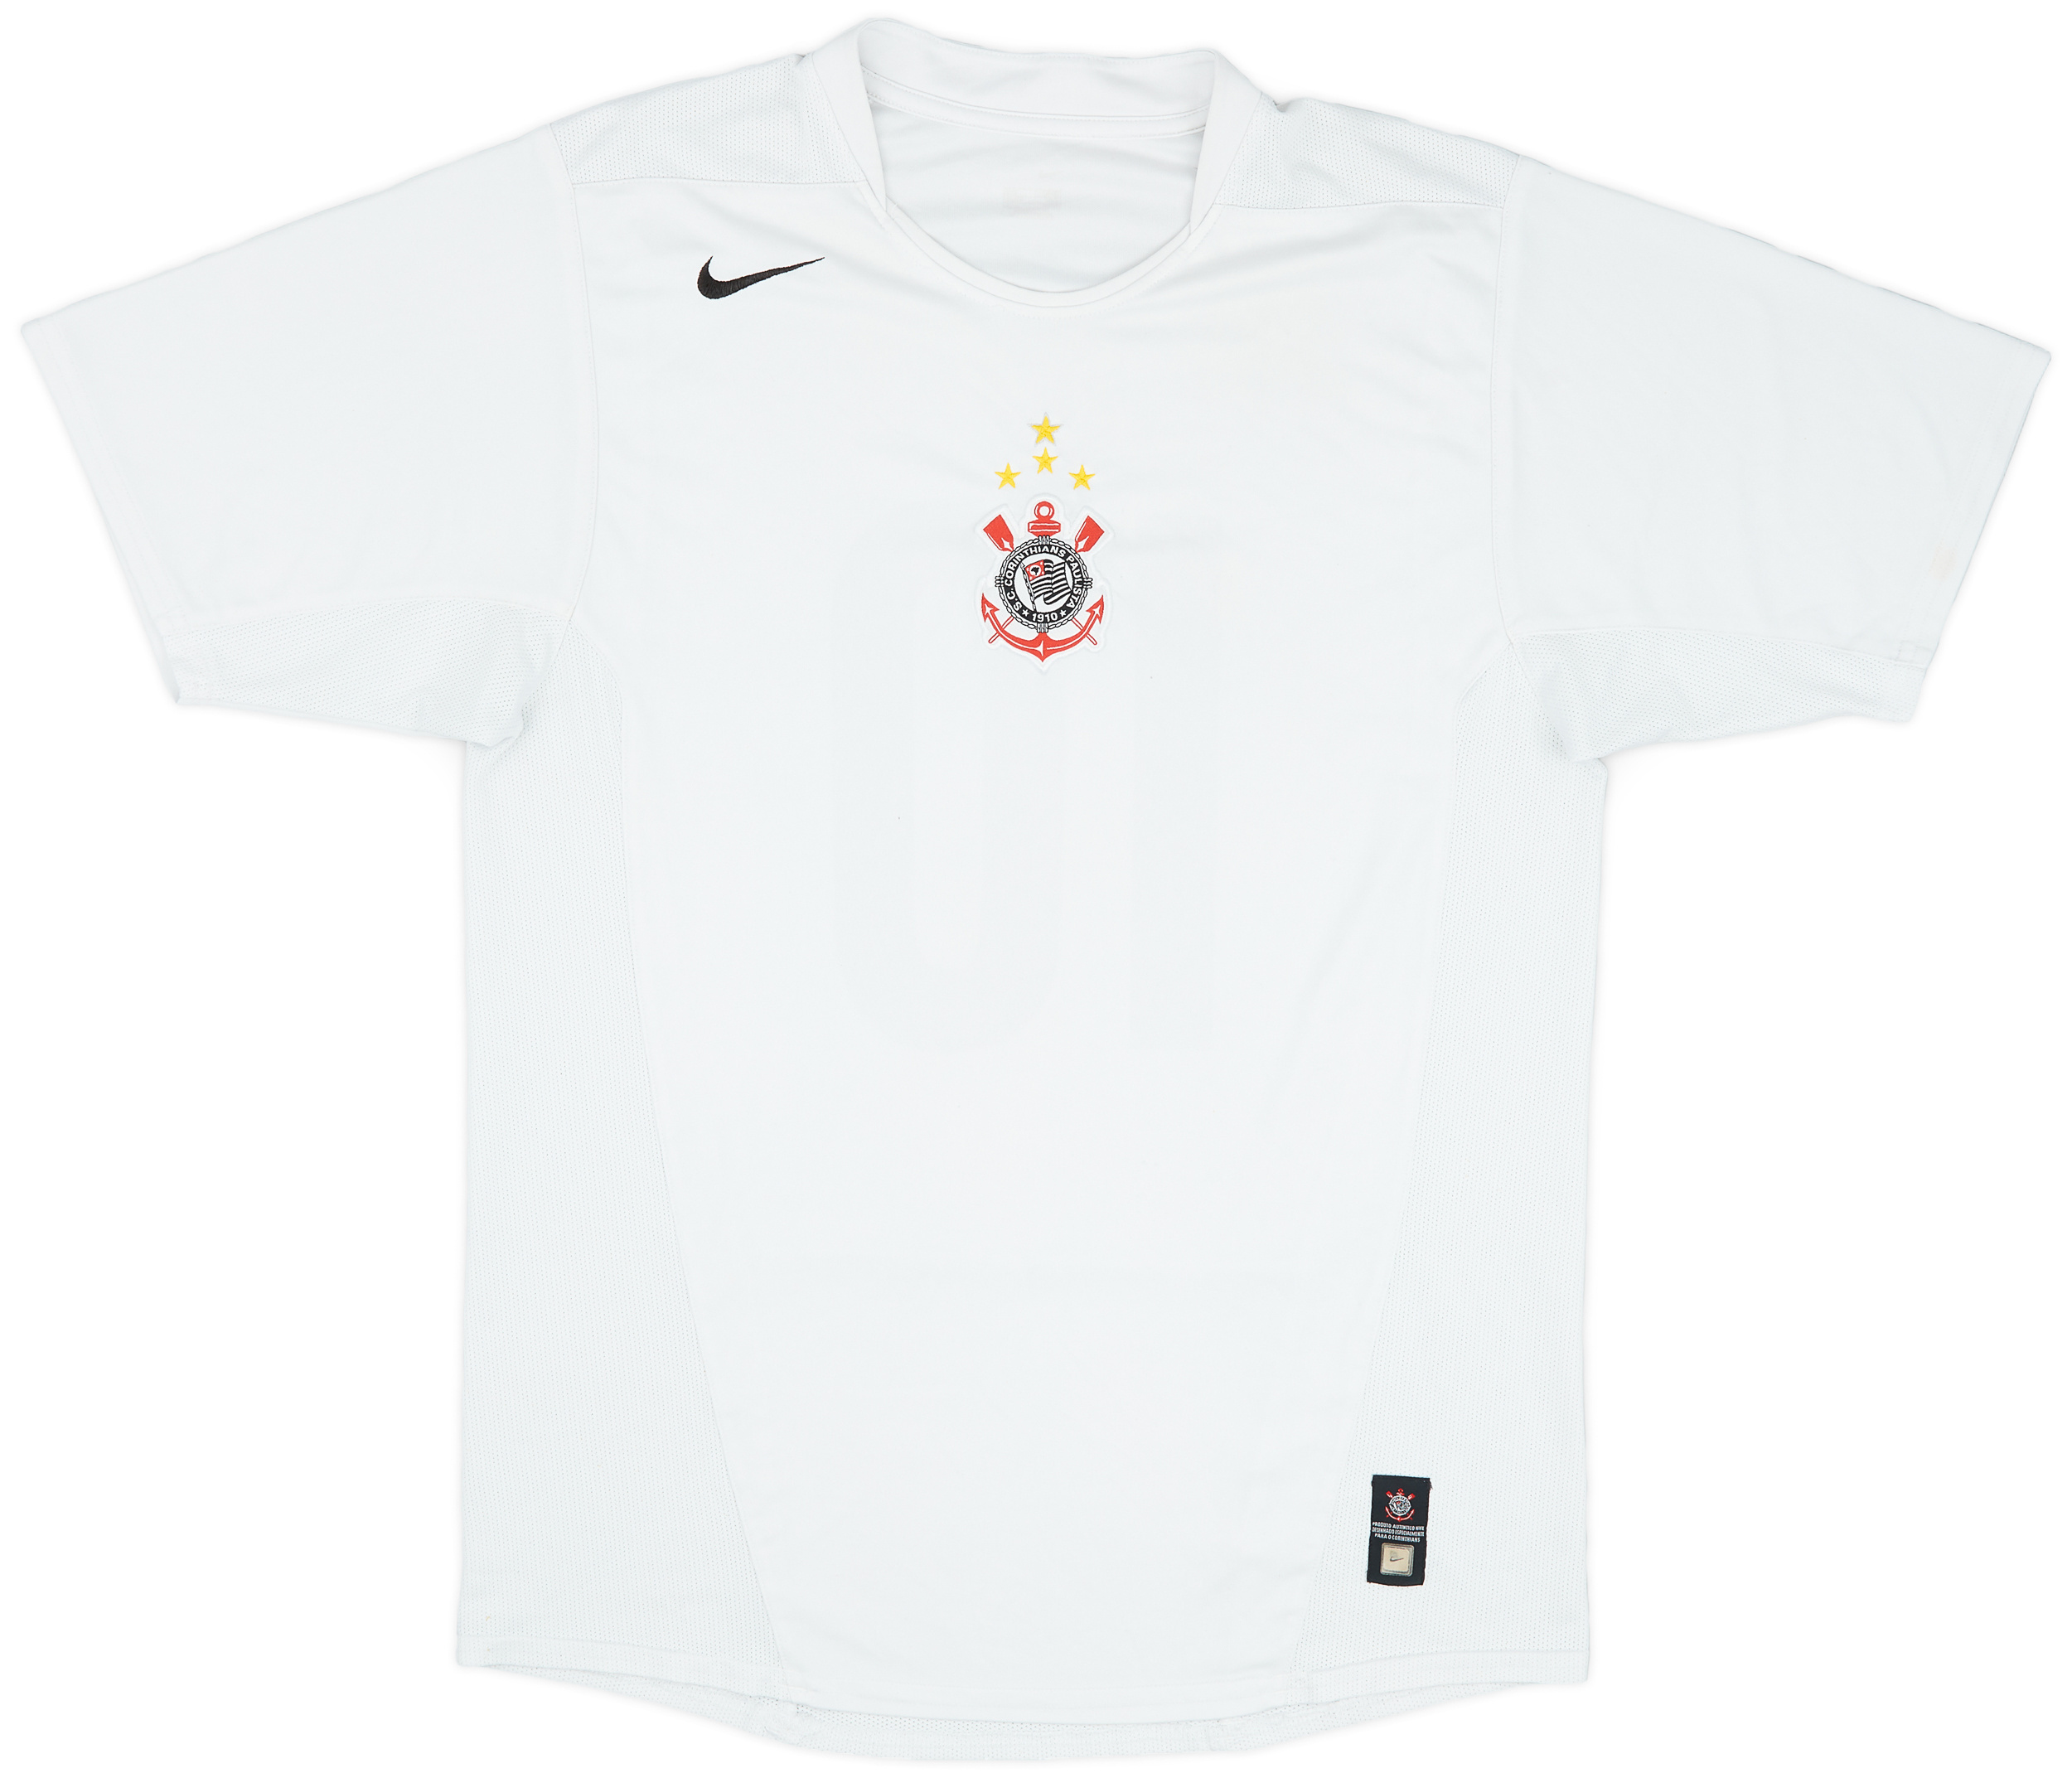 2004-05 Corinthians Home Shirt #10 (Tevez) - 8/10 - ()